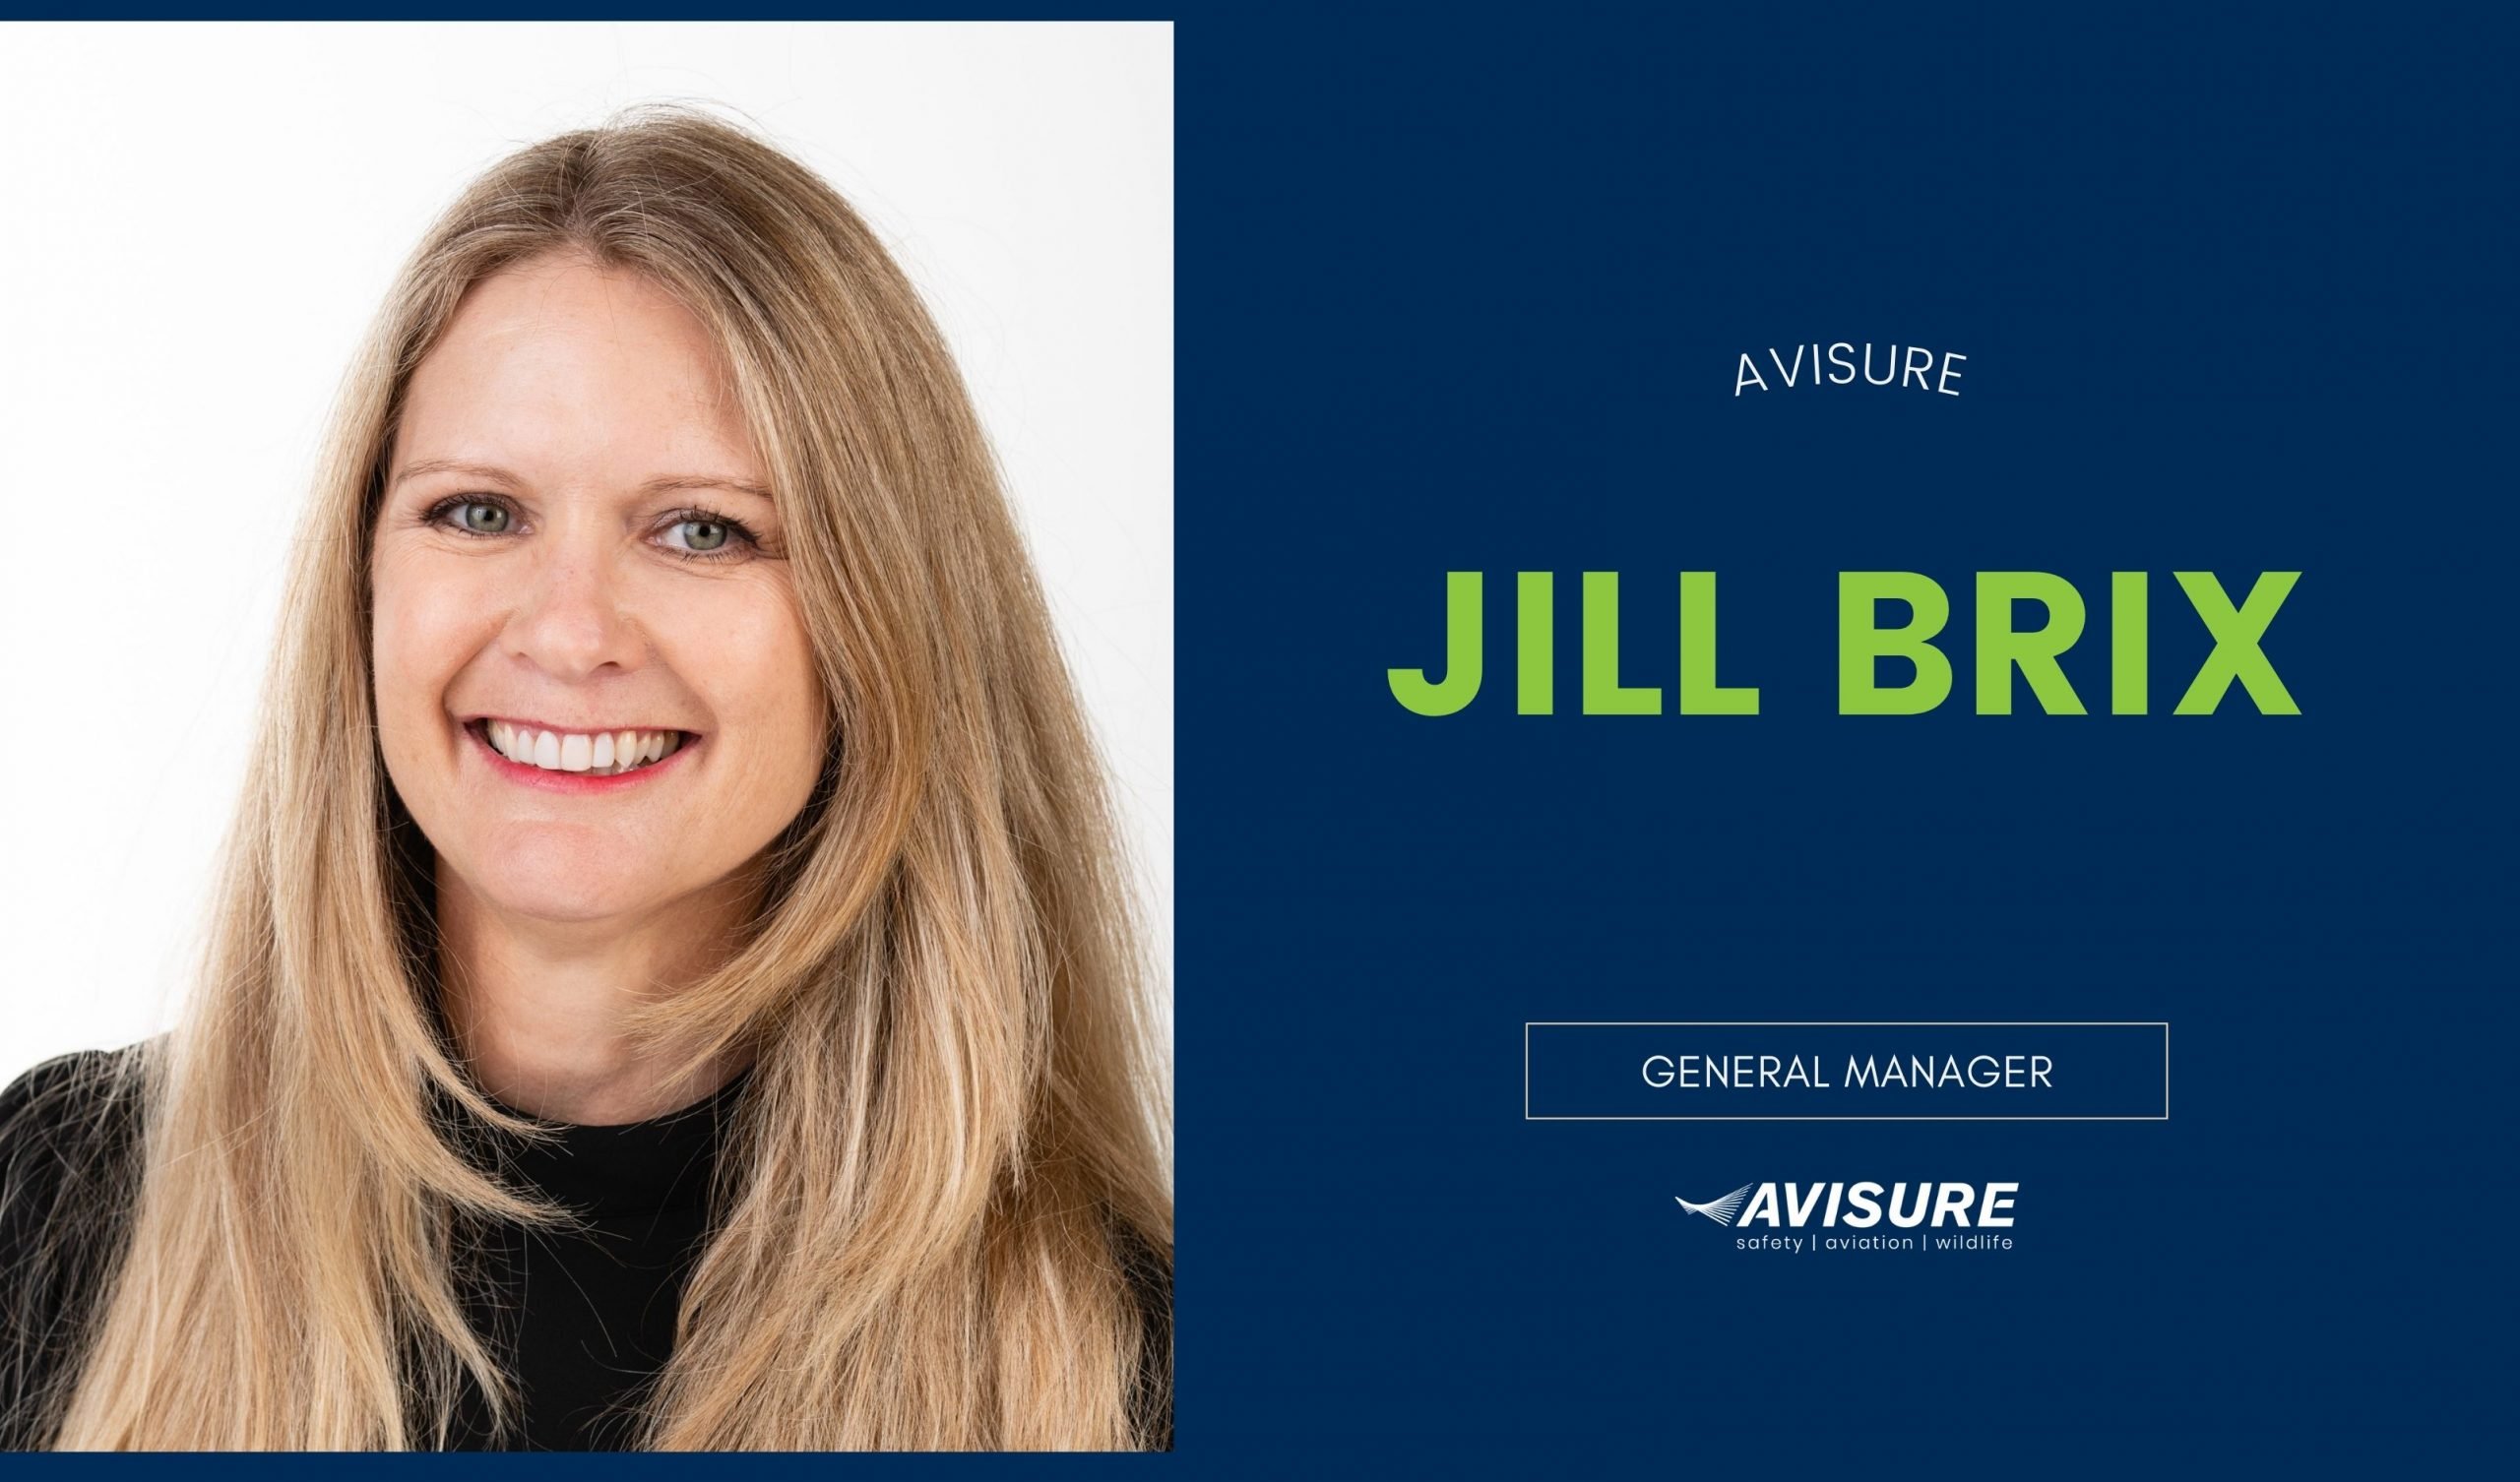 Jill Brix General Manager Avisure